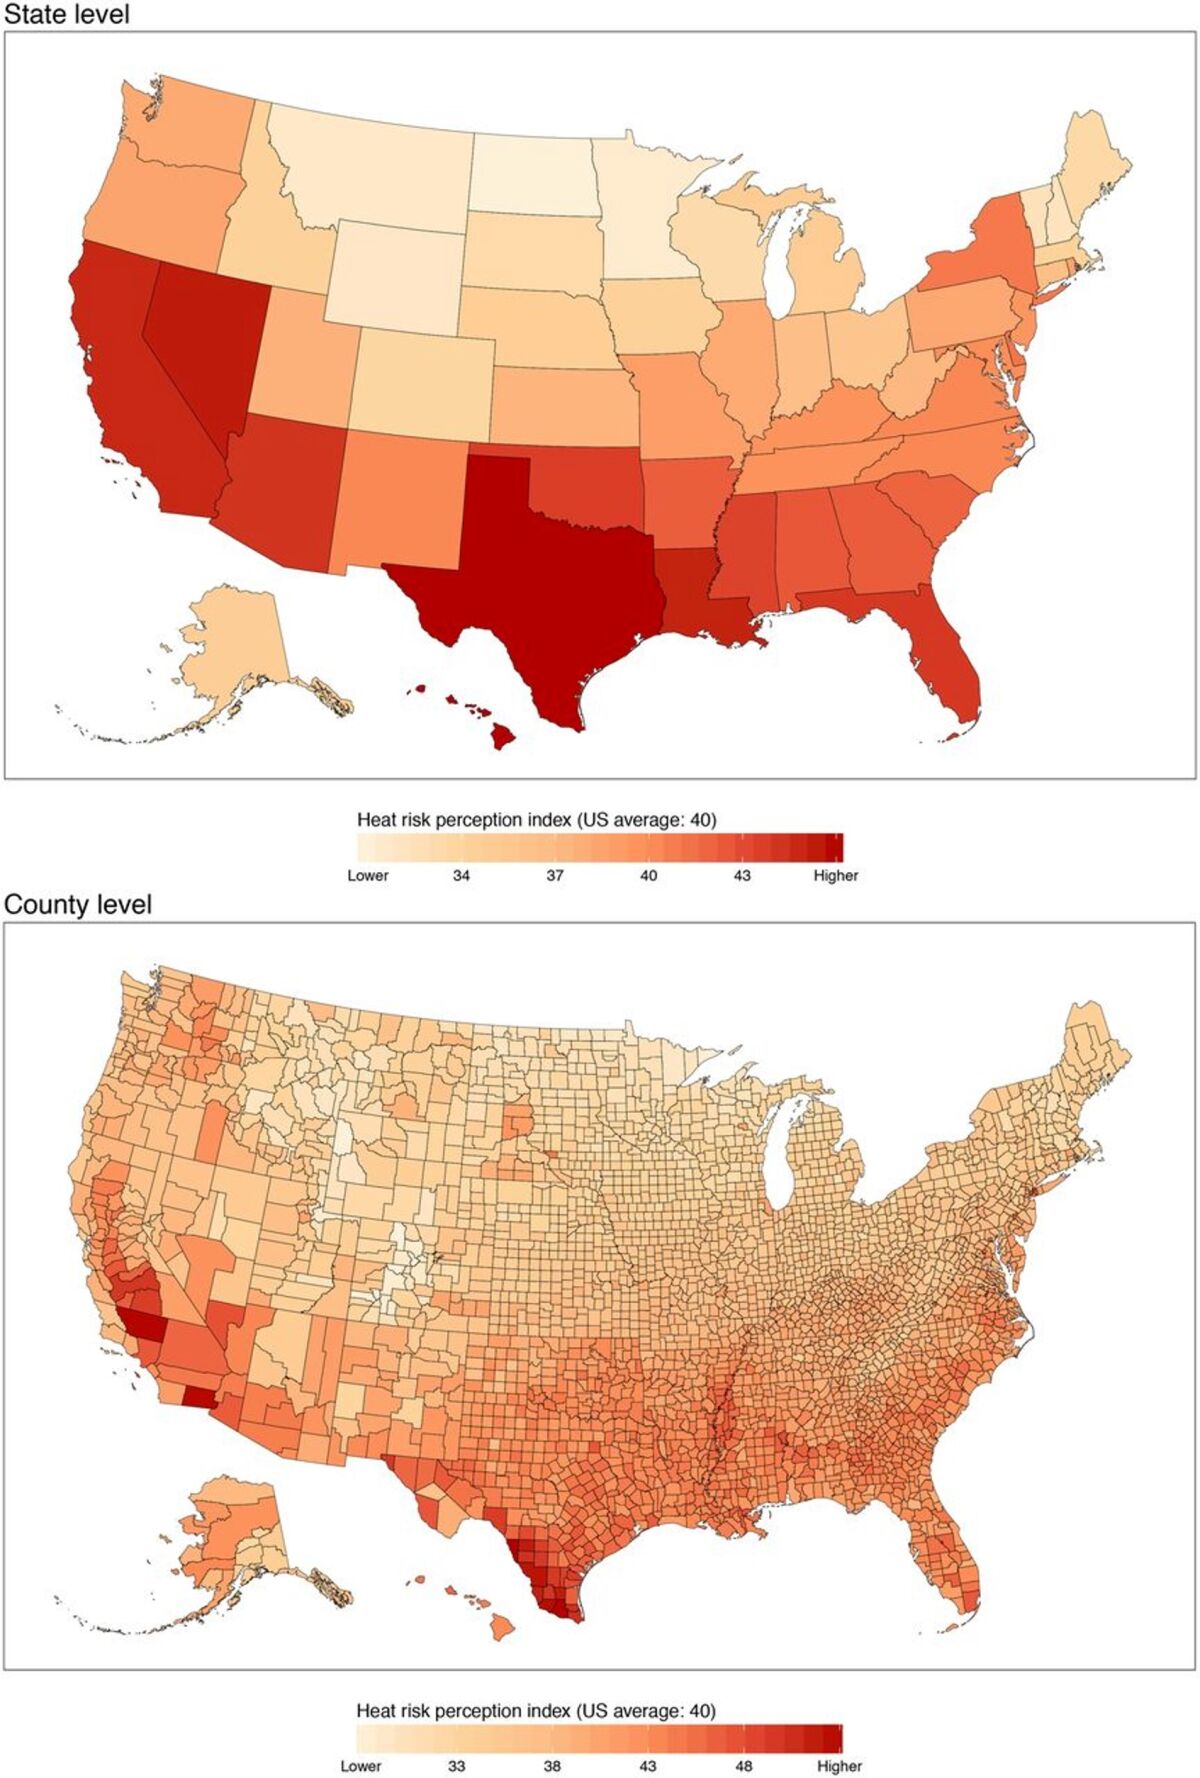 Heat risk perception maps